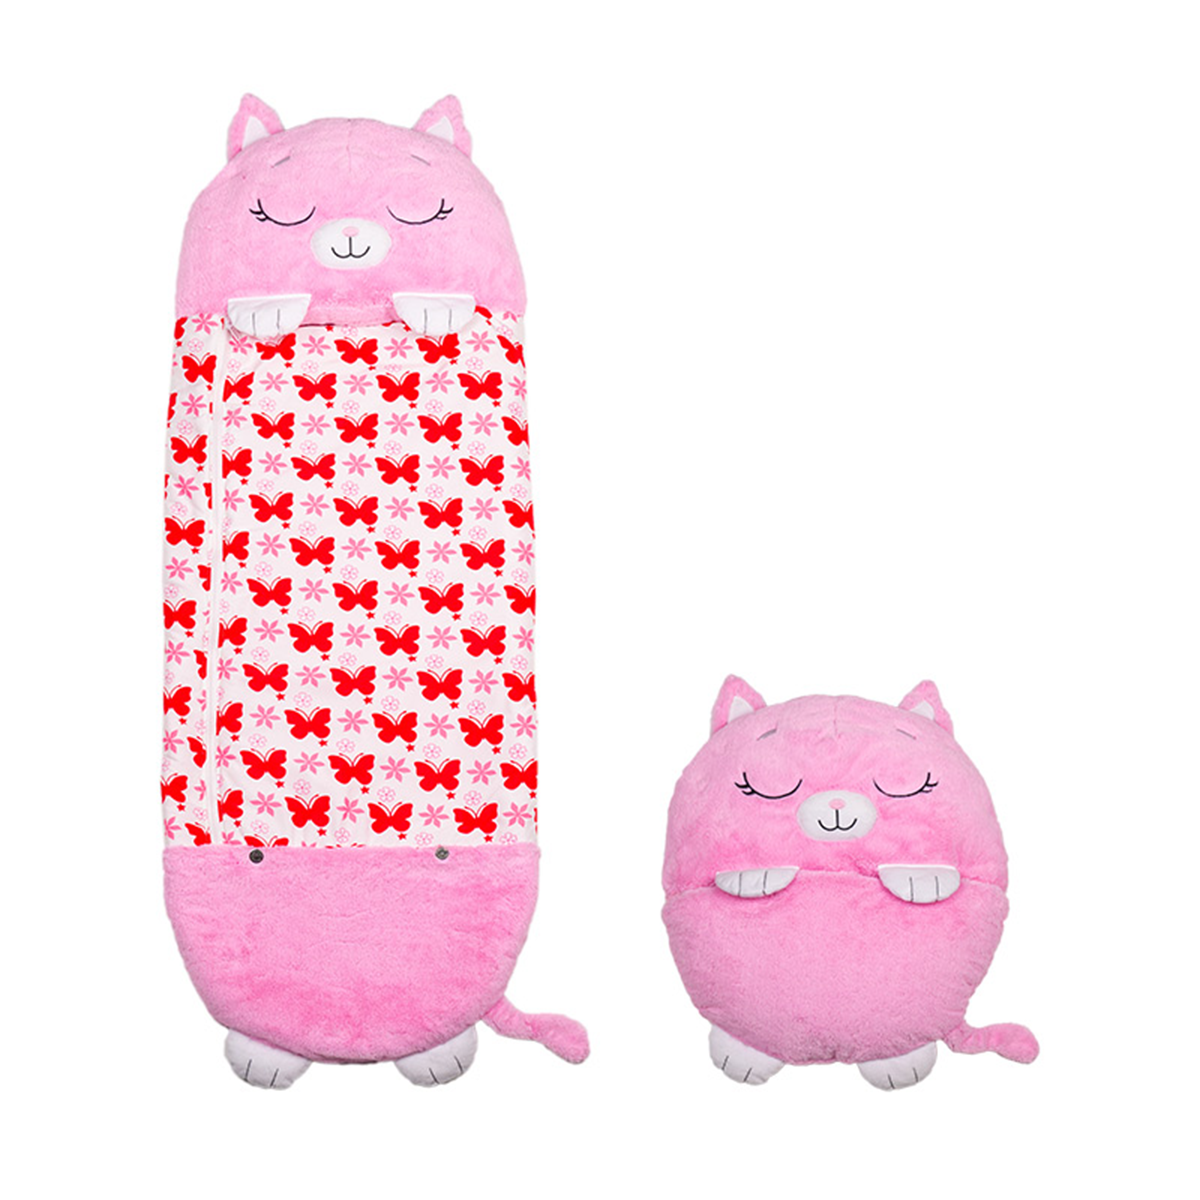 | Kinderschlafsack Katze MEDIASHOP Nappers Schlafsack/Kuscheltier pink Happy L Flauschiger